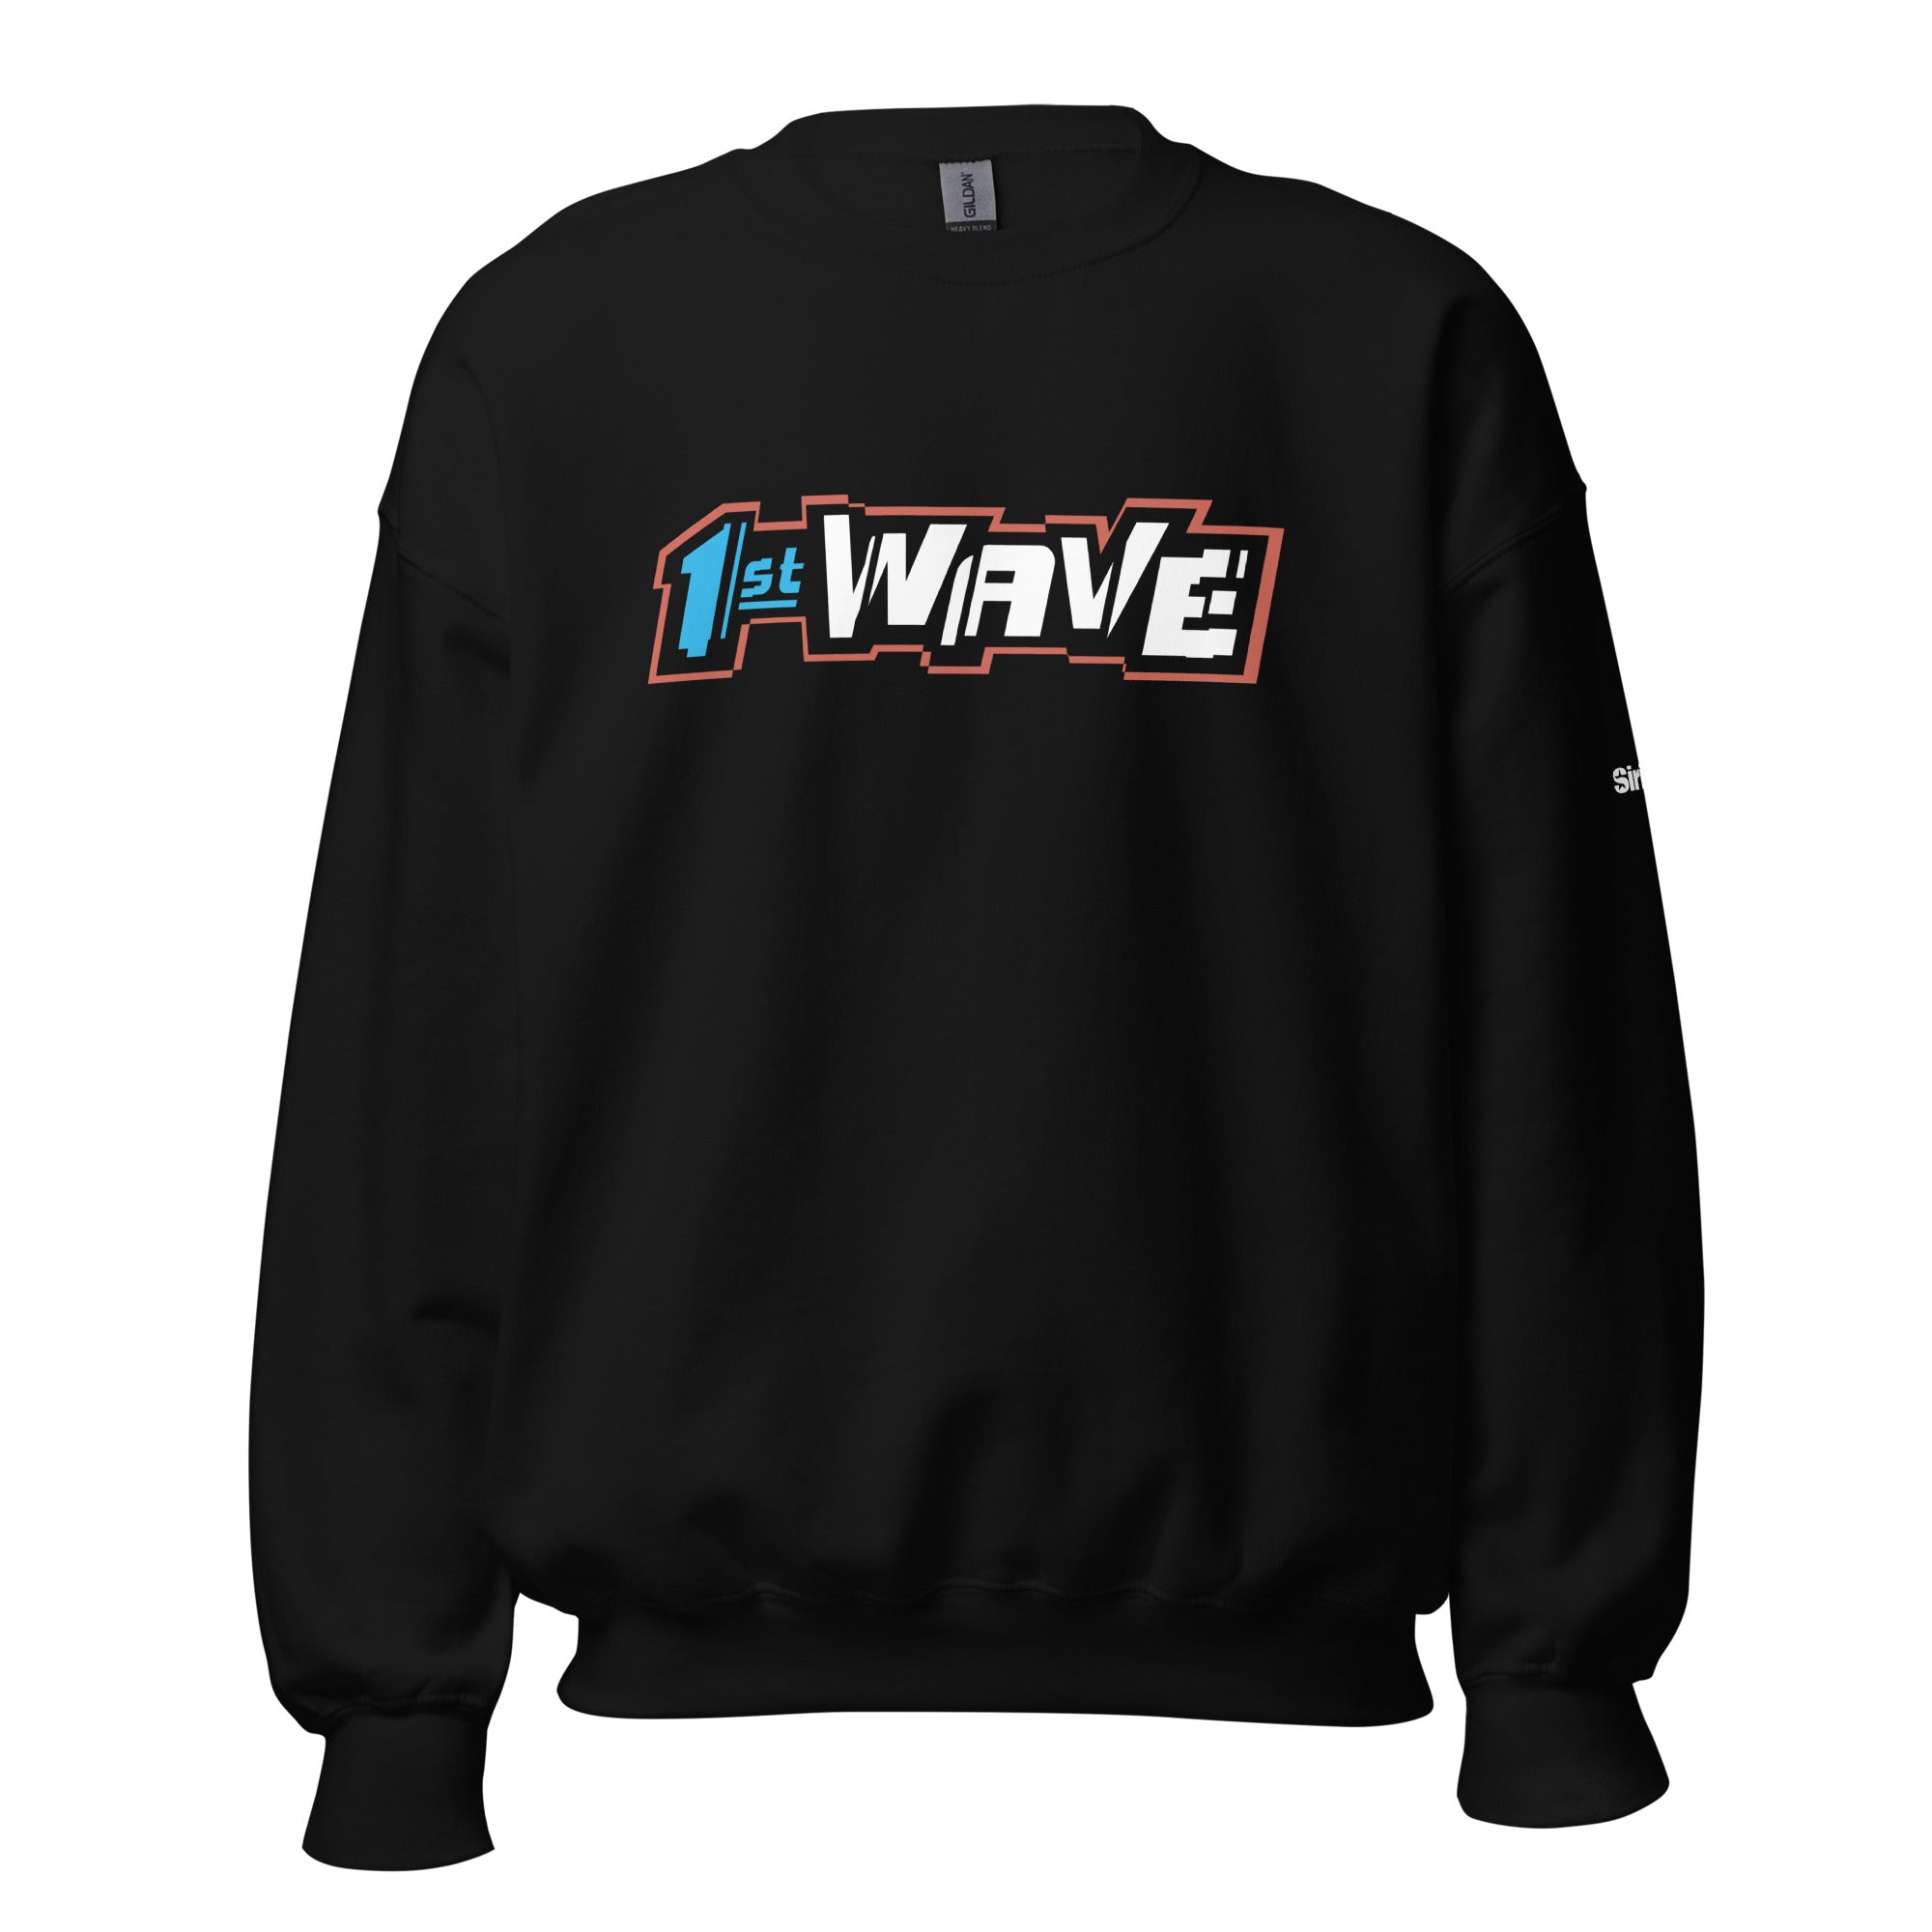 1st Wave: Sweatshirt (Black)